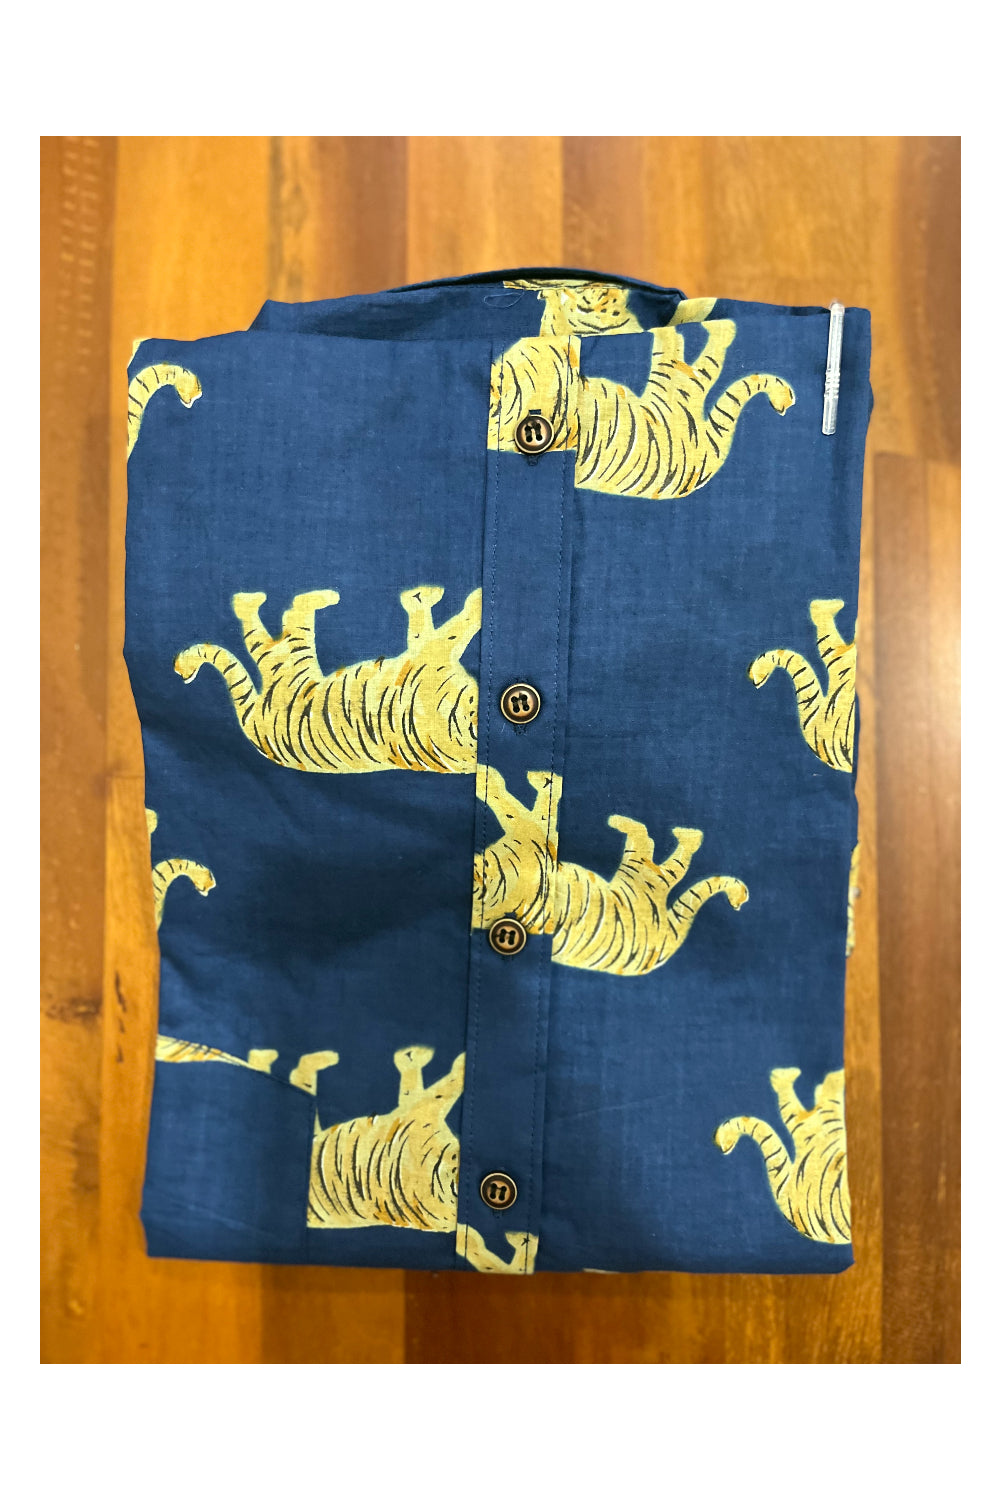 Southloom Jaipur Cotton Tiger Hand Block Printed Blue Shirt (Half Sleeves)